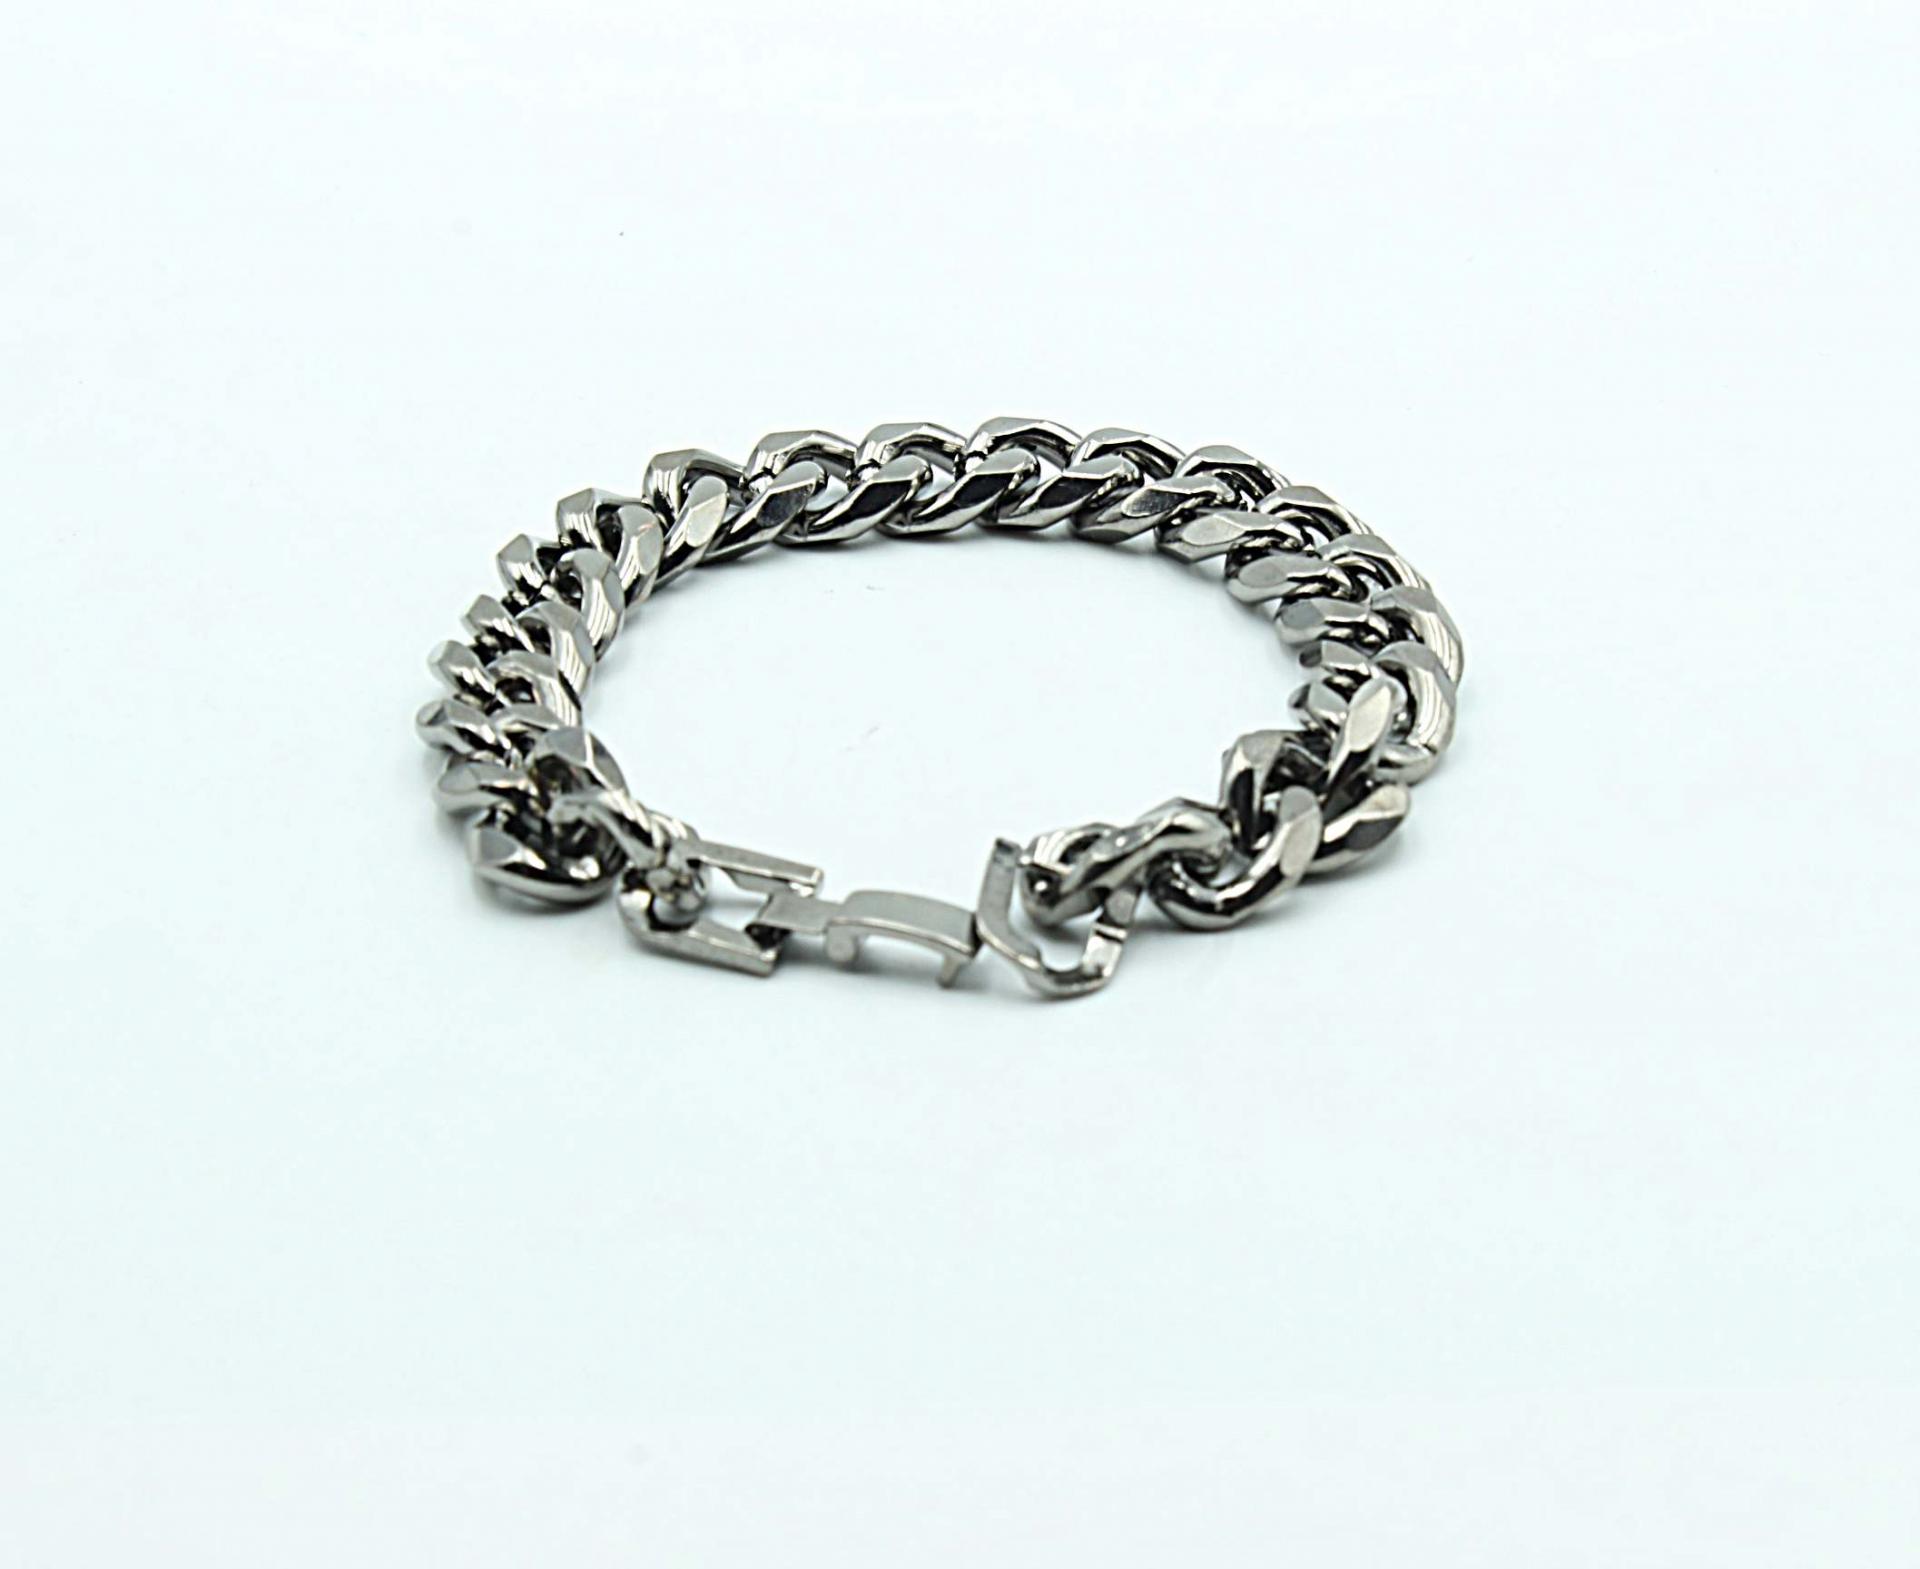 Gunmetal Black urban link chain bracelet from Chrissie C